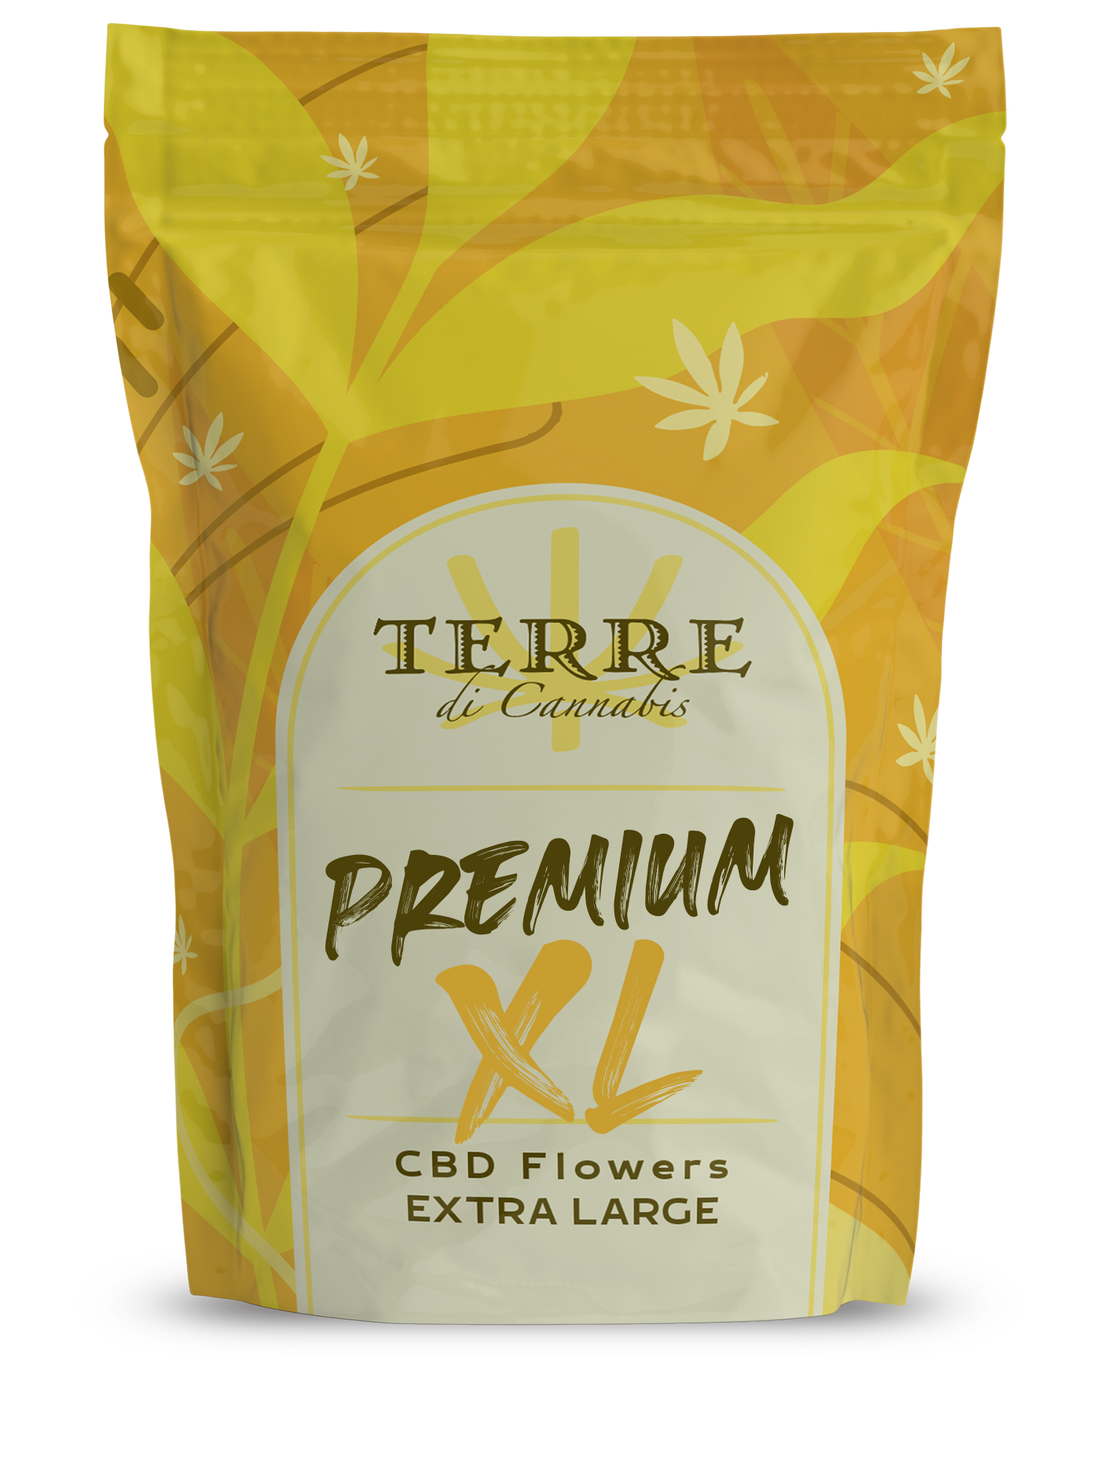 Flores de CBD y CBG Premium XL